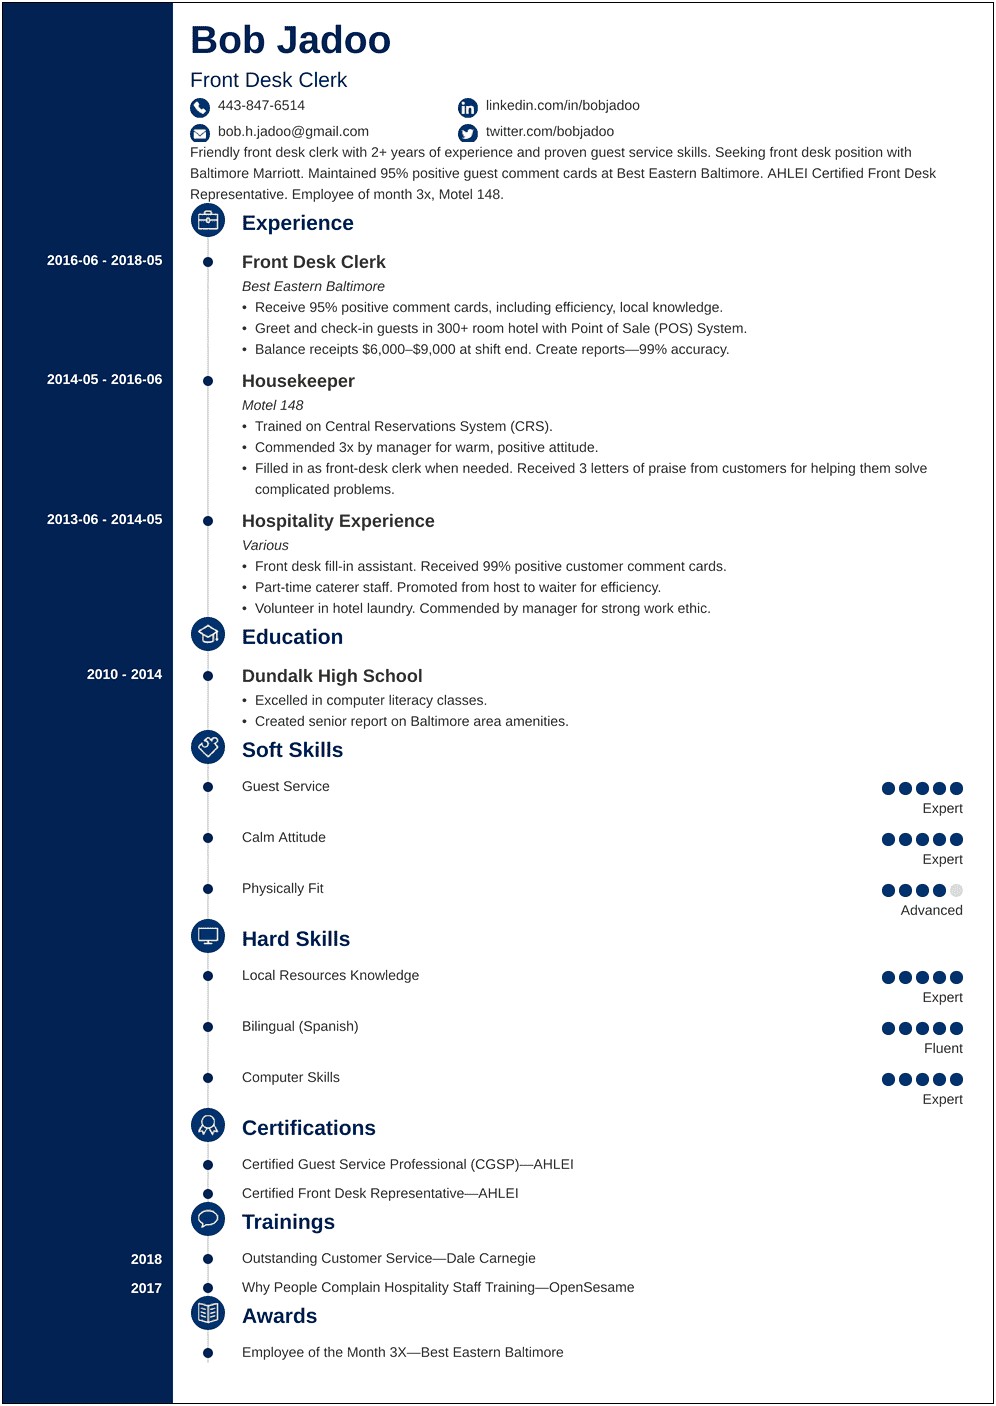 Resume Job Description For Hotel Server